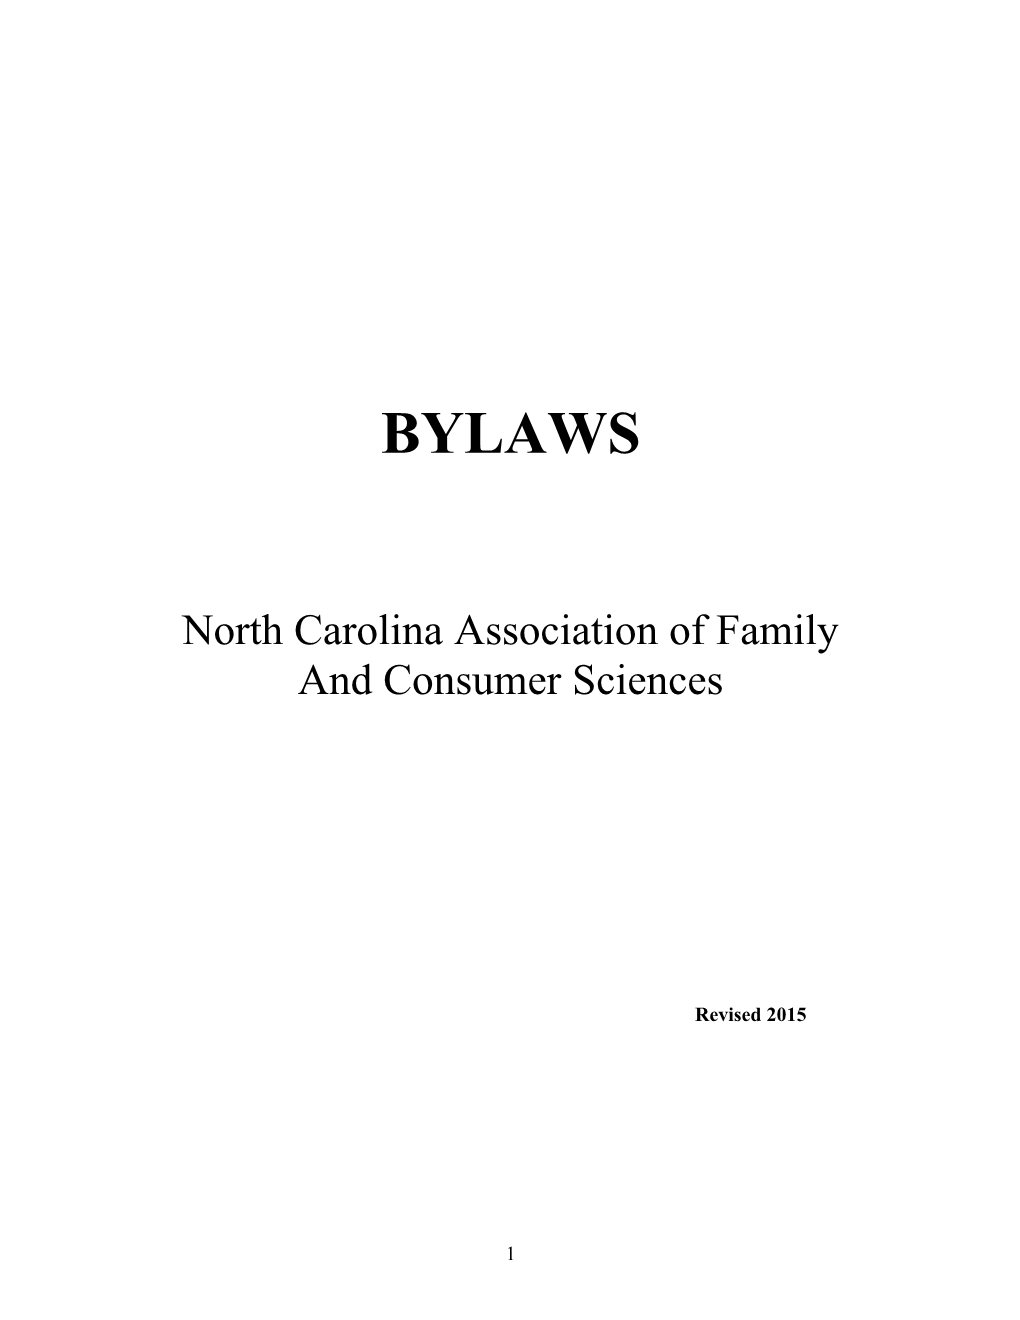 North Carolina Associaton of Family and Consumer Science Bylaws